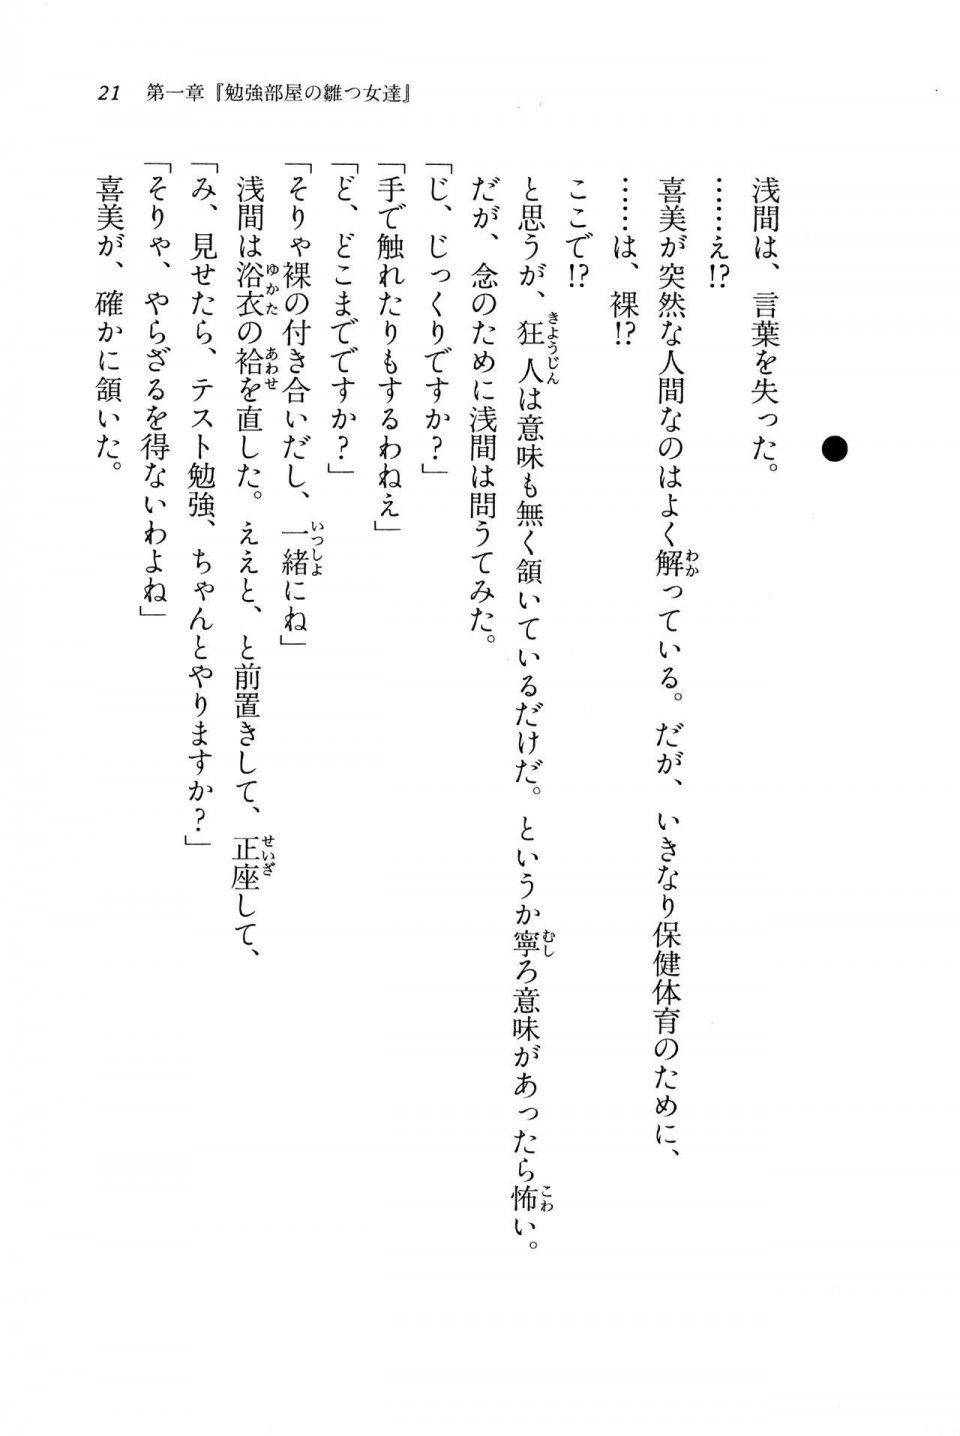 Kyoukai Senjou no Horizon BD Special Mininovel Vol 7(4A) - Photo #25